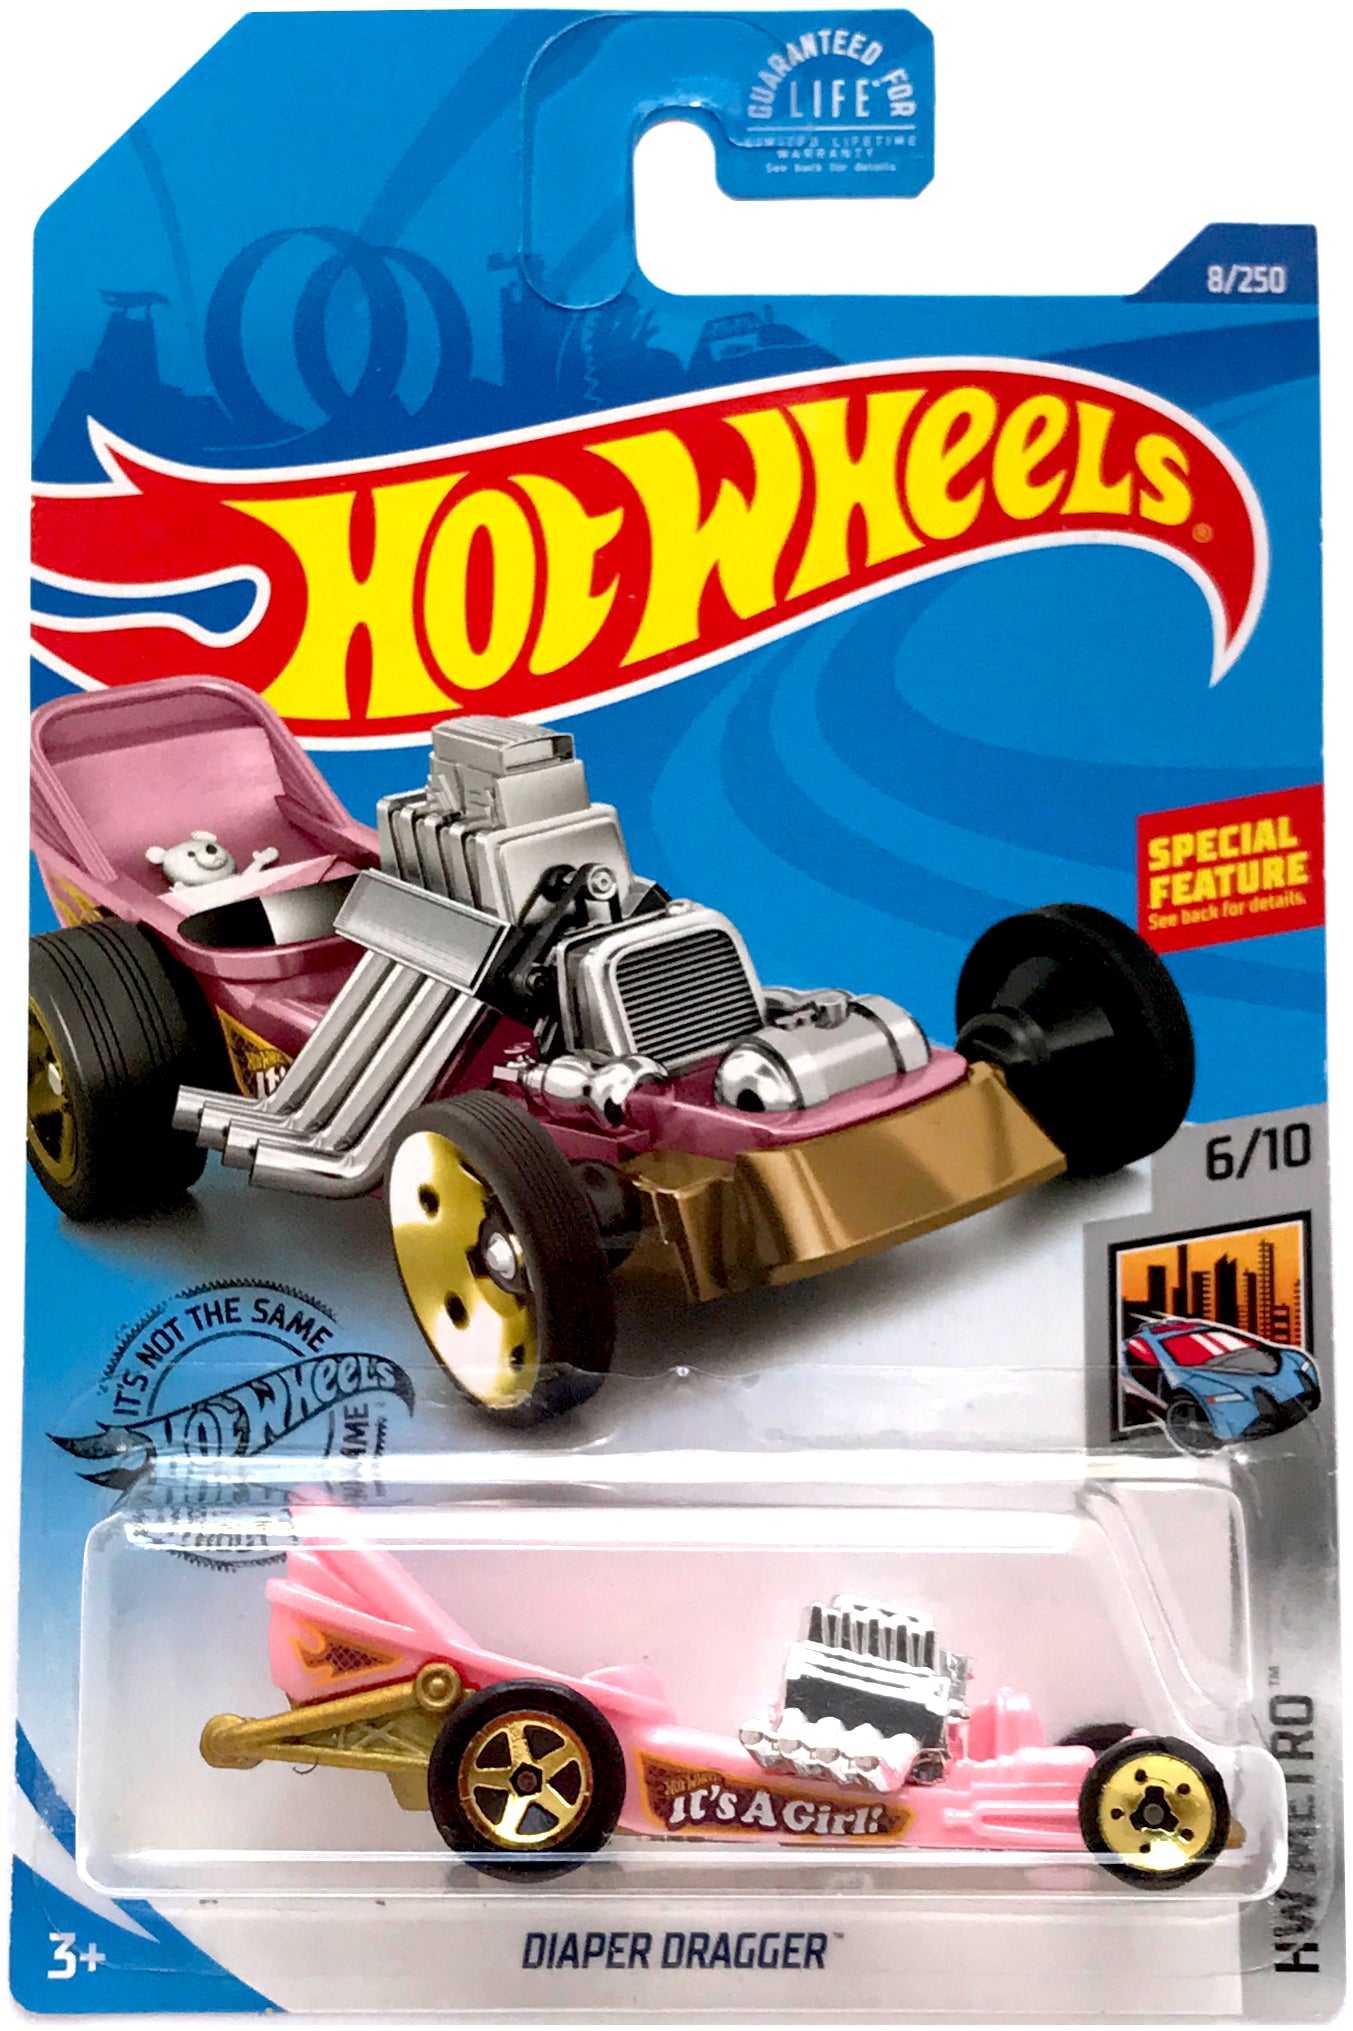 2020 Hot Wheels Mainline #008 - Diaper Dragger (It's a Girl Pink) GHD93